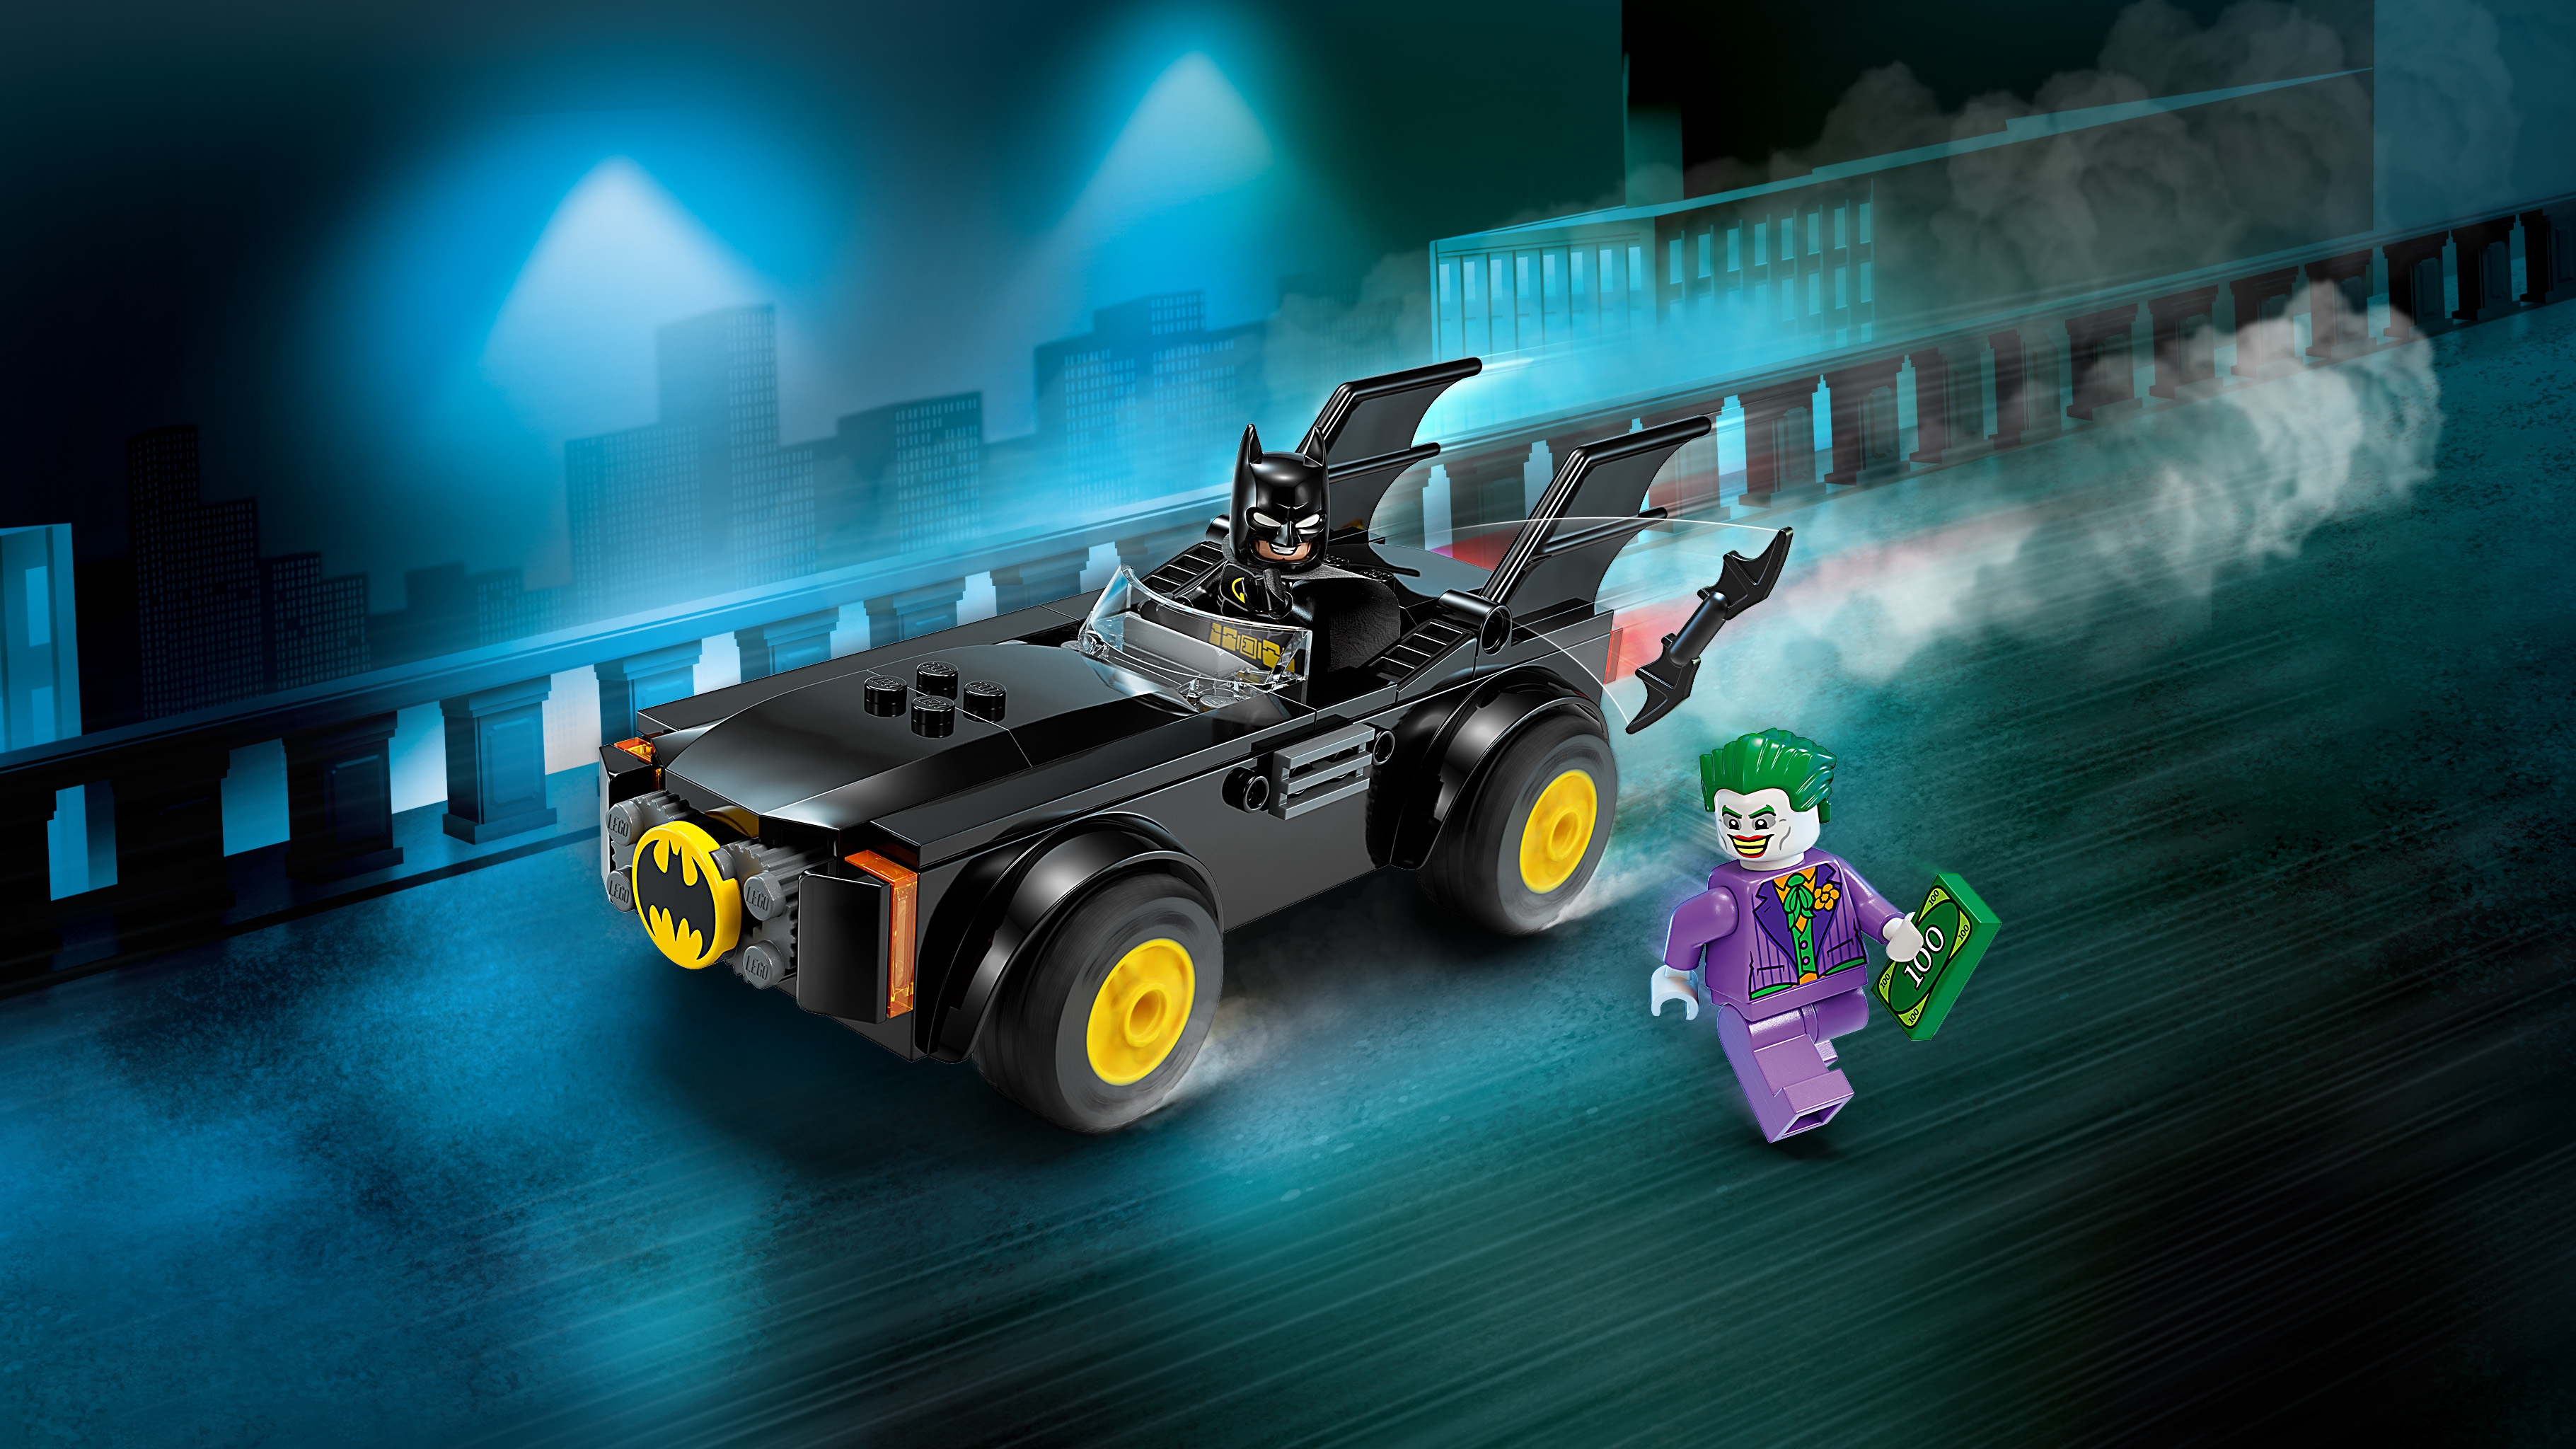 Batmobile™ Pursuit: vs. The Joker™ 76264 LEGO® DC Sets - LEGO.com for kids